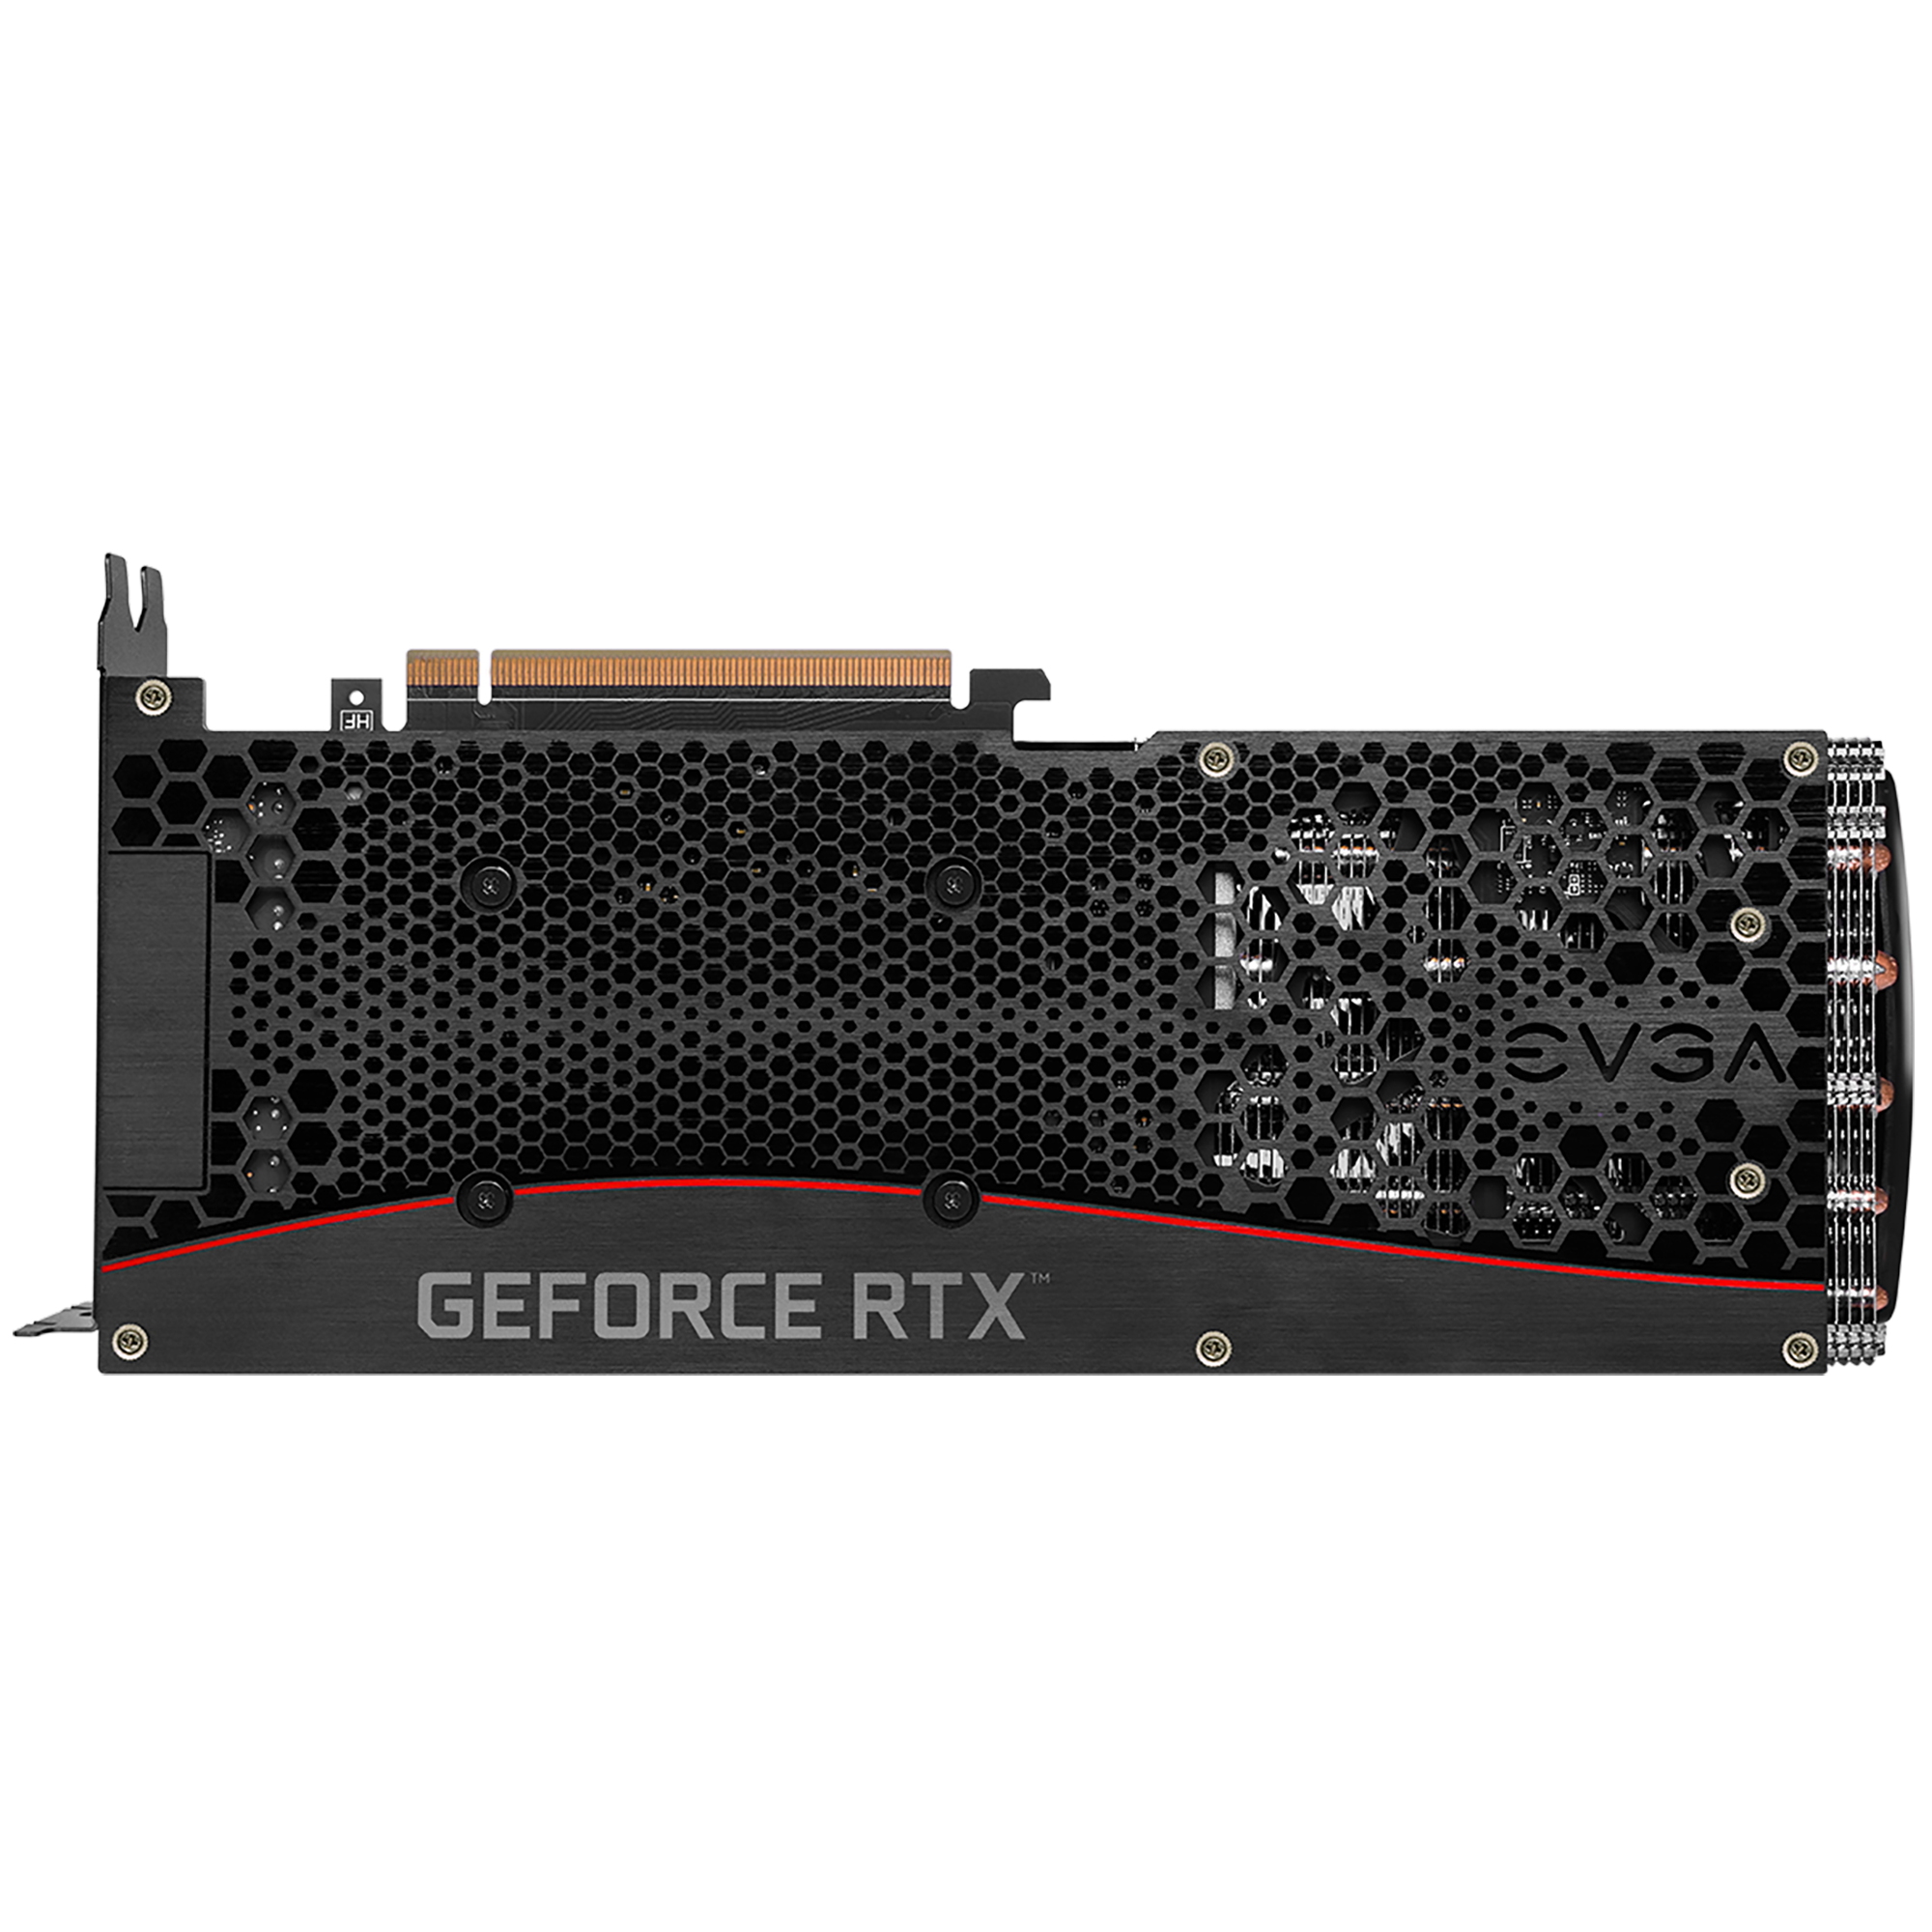 EVGA - Products - EVGA GeForce RTX 3070 XC3 ULTRA GAMING, 08G-P5 